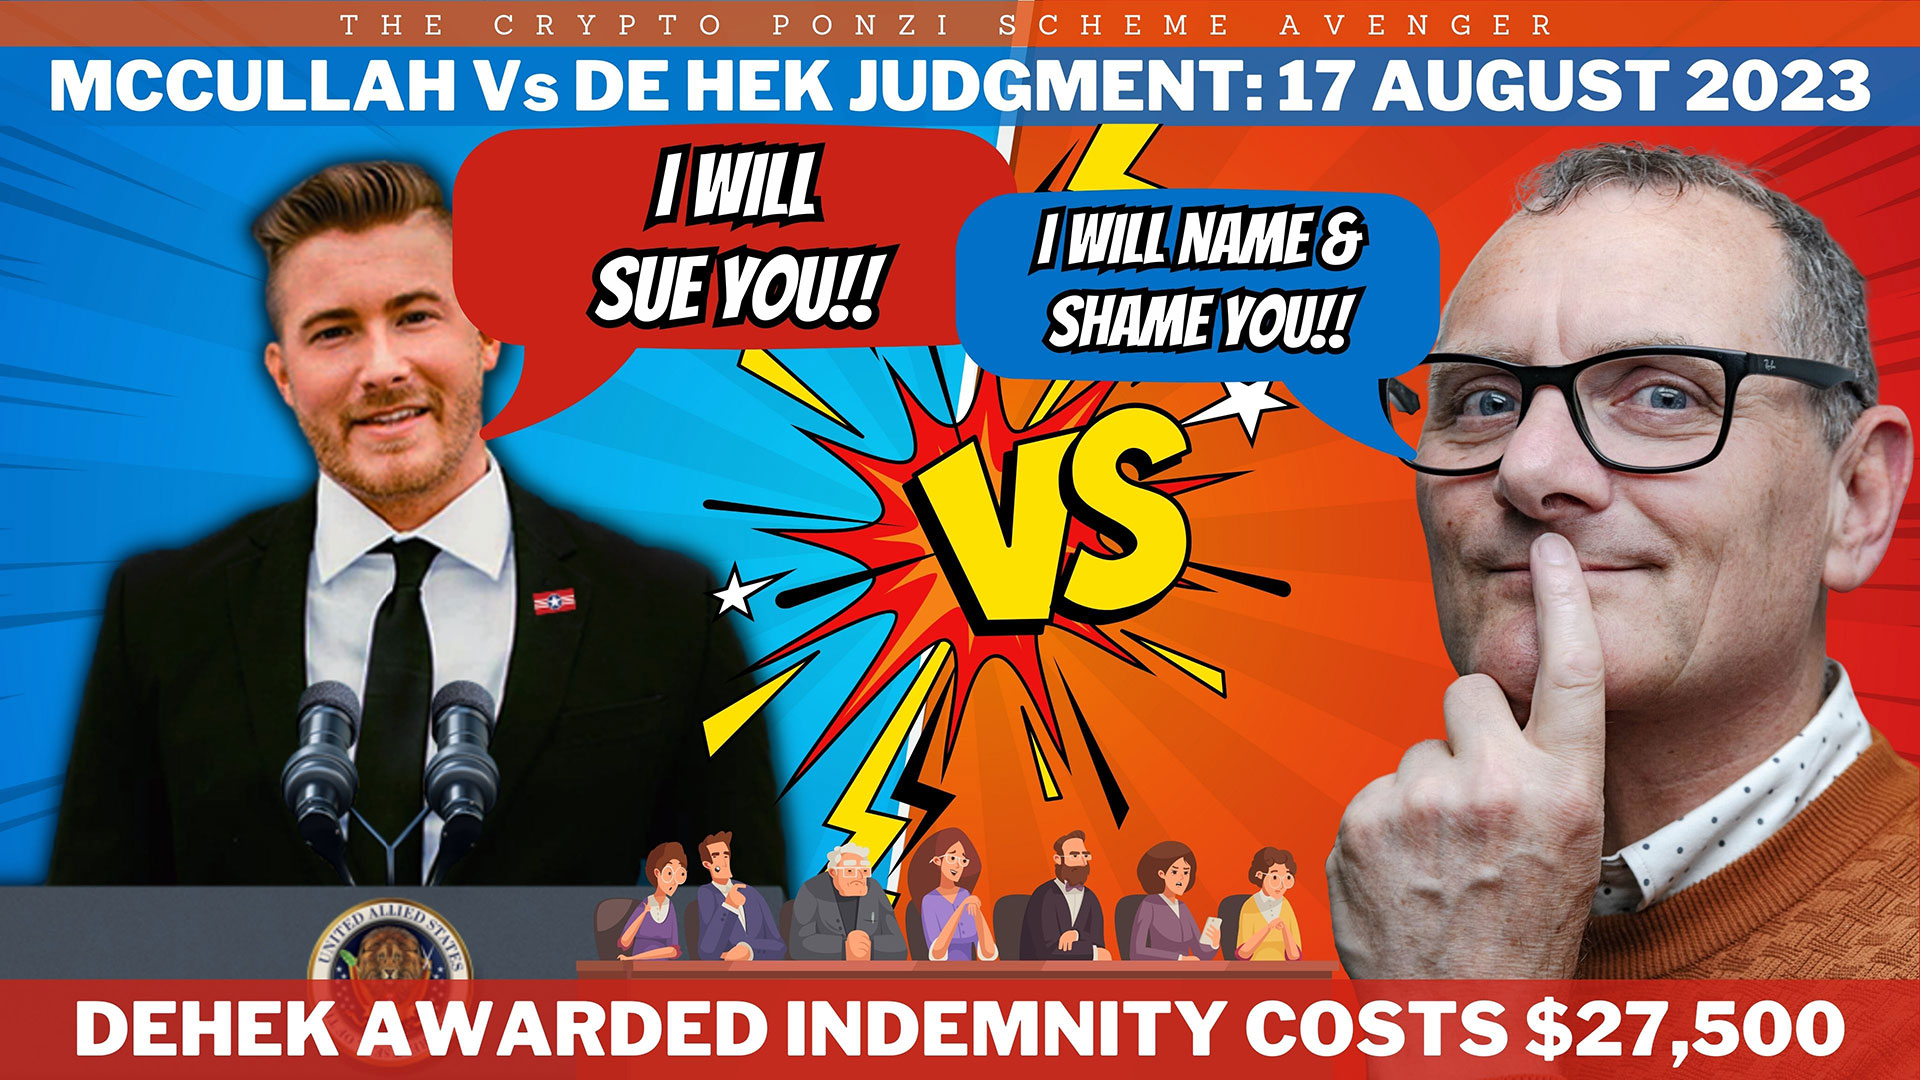 Landmark Verdict: de Hek Triumphs with $27,500 Indemnity Costs - Unraveling the McCullah vs. de Hek